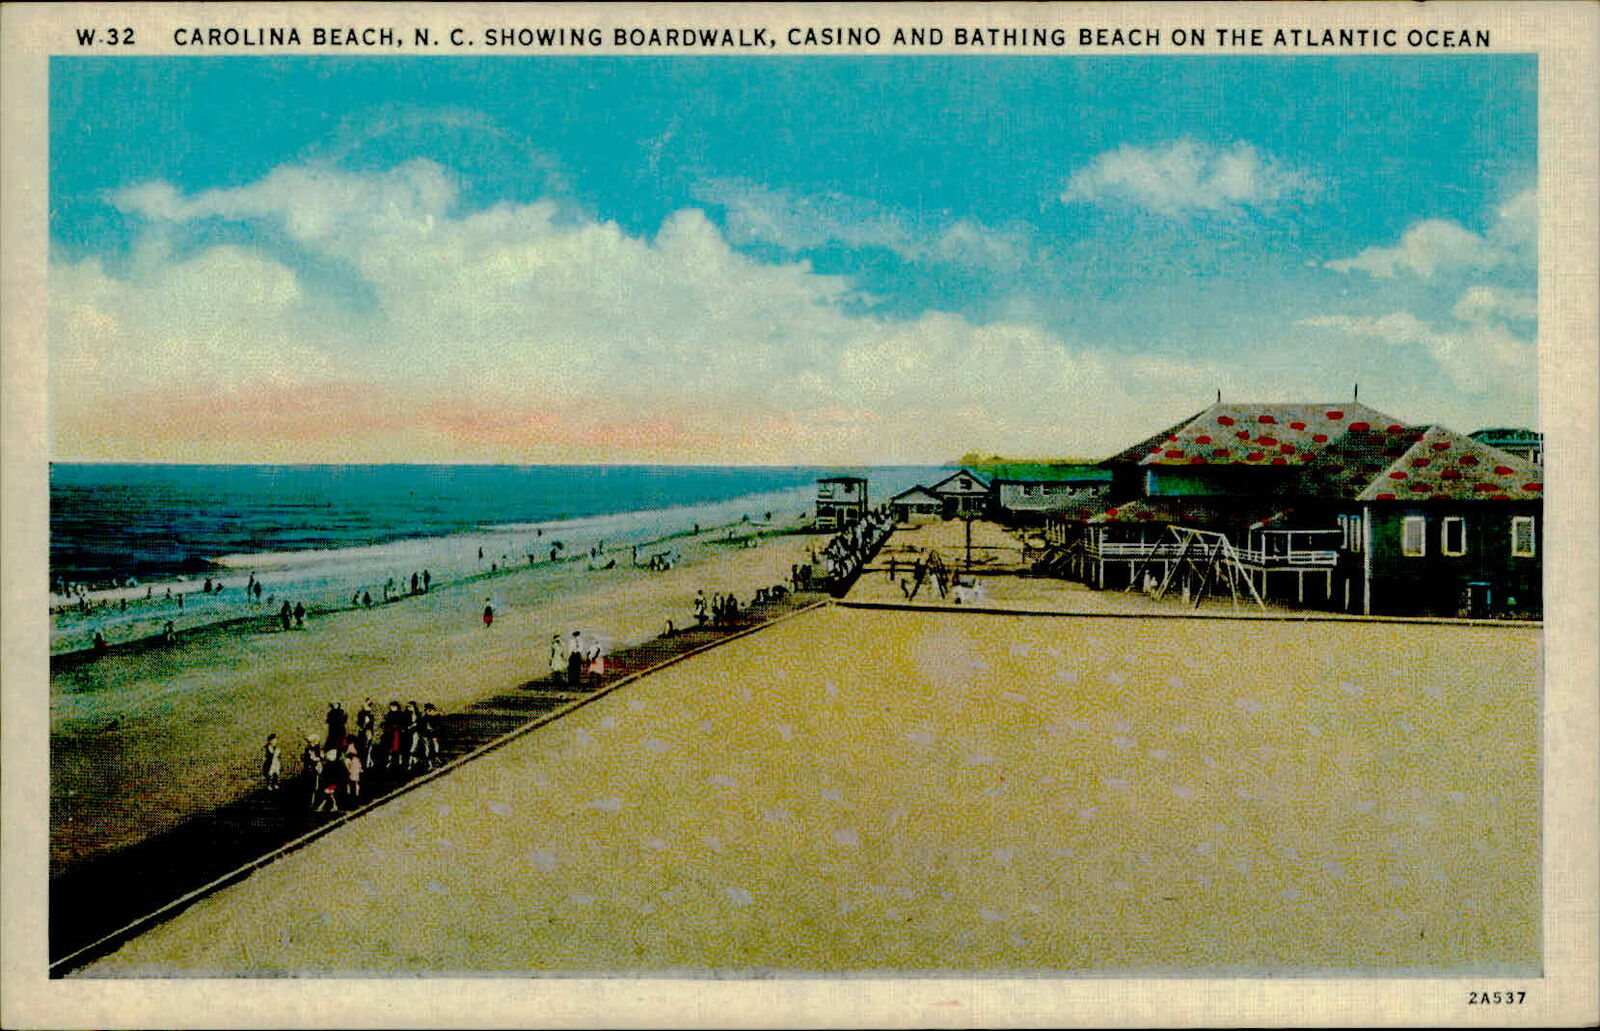 Postcard: W.32 CAROLINA BEACH, N. C. SHOWING BOARDWALK, CASINO